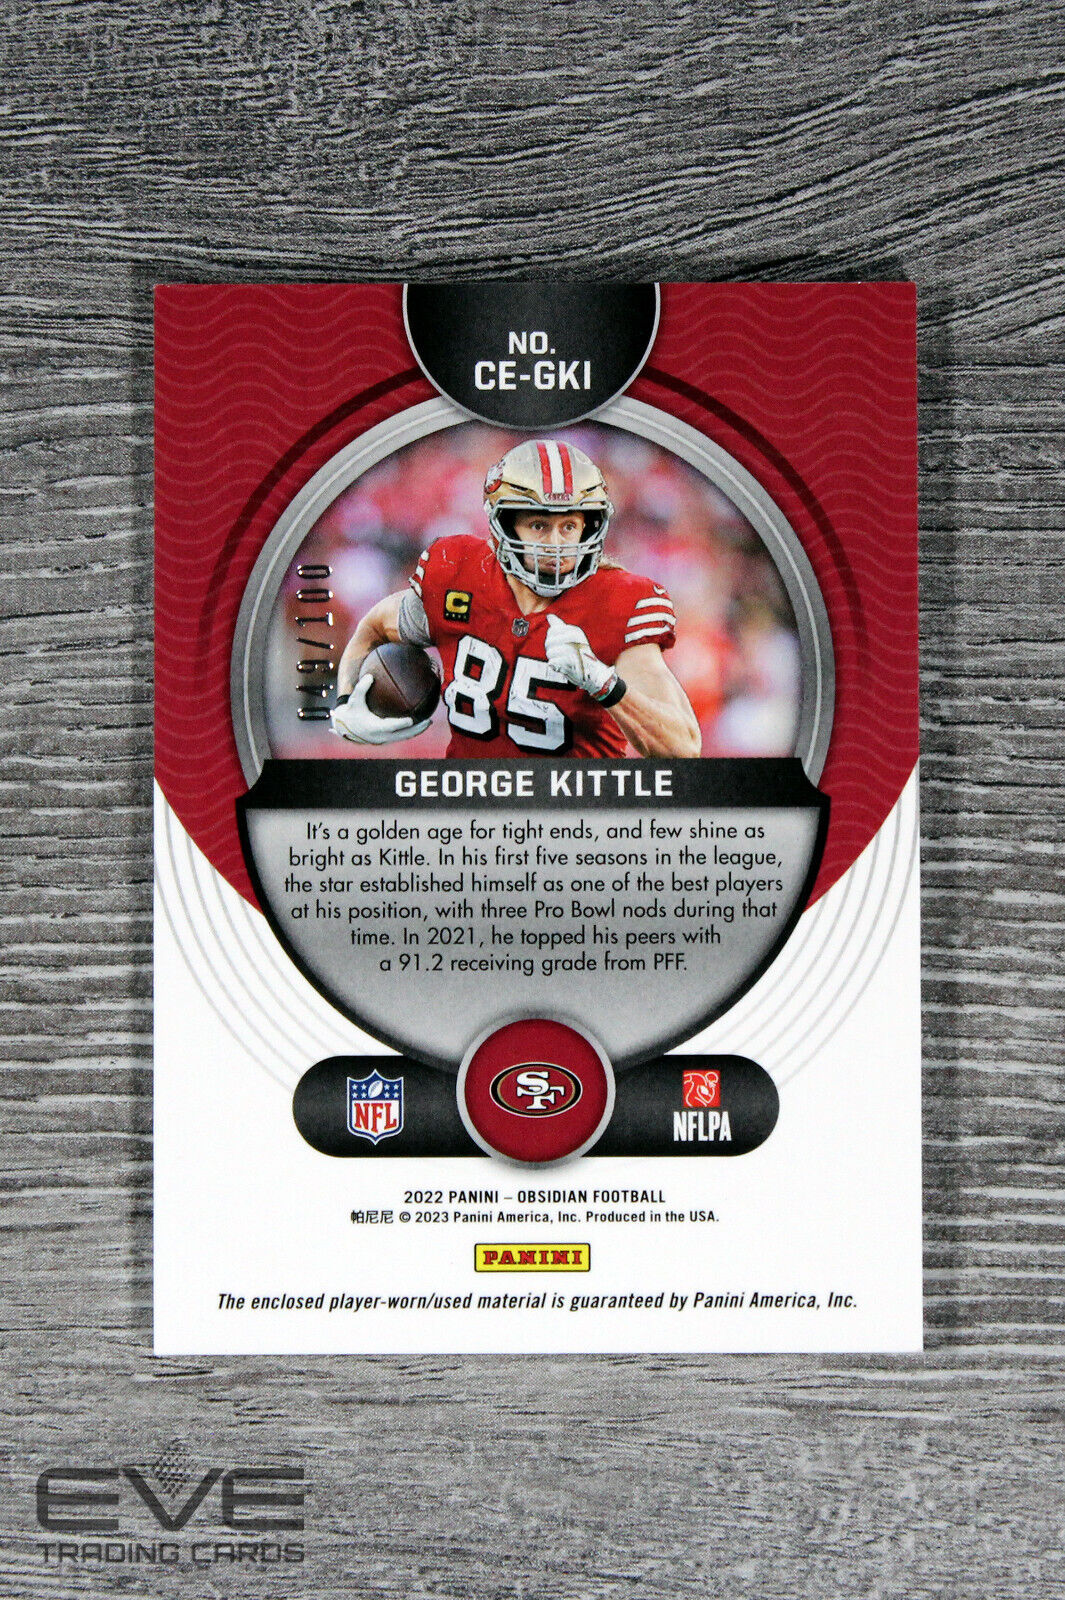 2022 Panini Obsidian NFL Card #CE-GKI George Kittle Cutting Edge Patch /100 NM/M